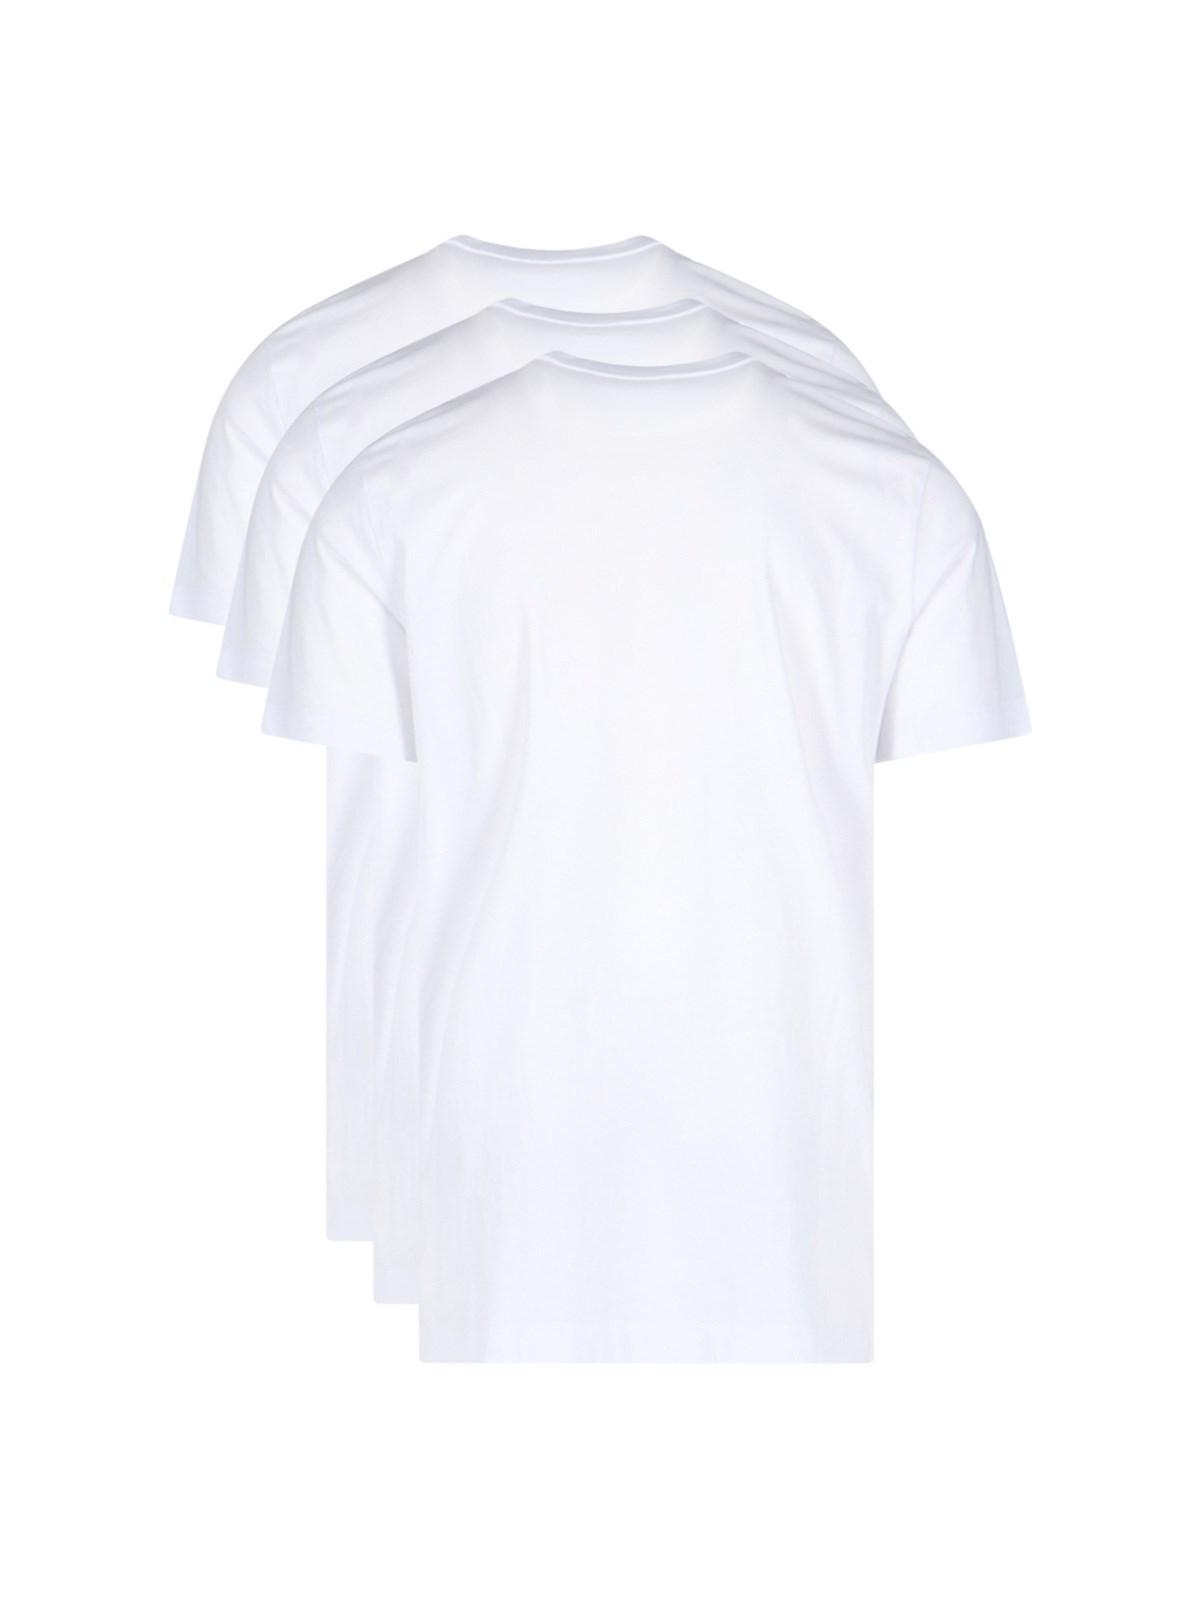 Lv 2pcs set Price shirt 8,000 - MacMartins collections